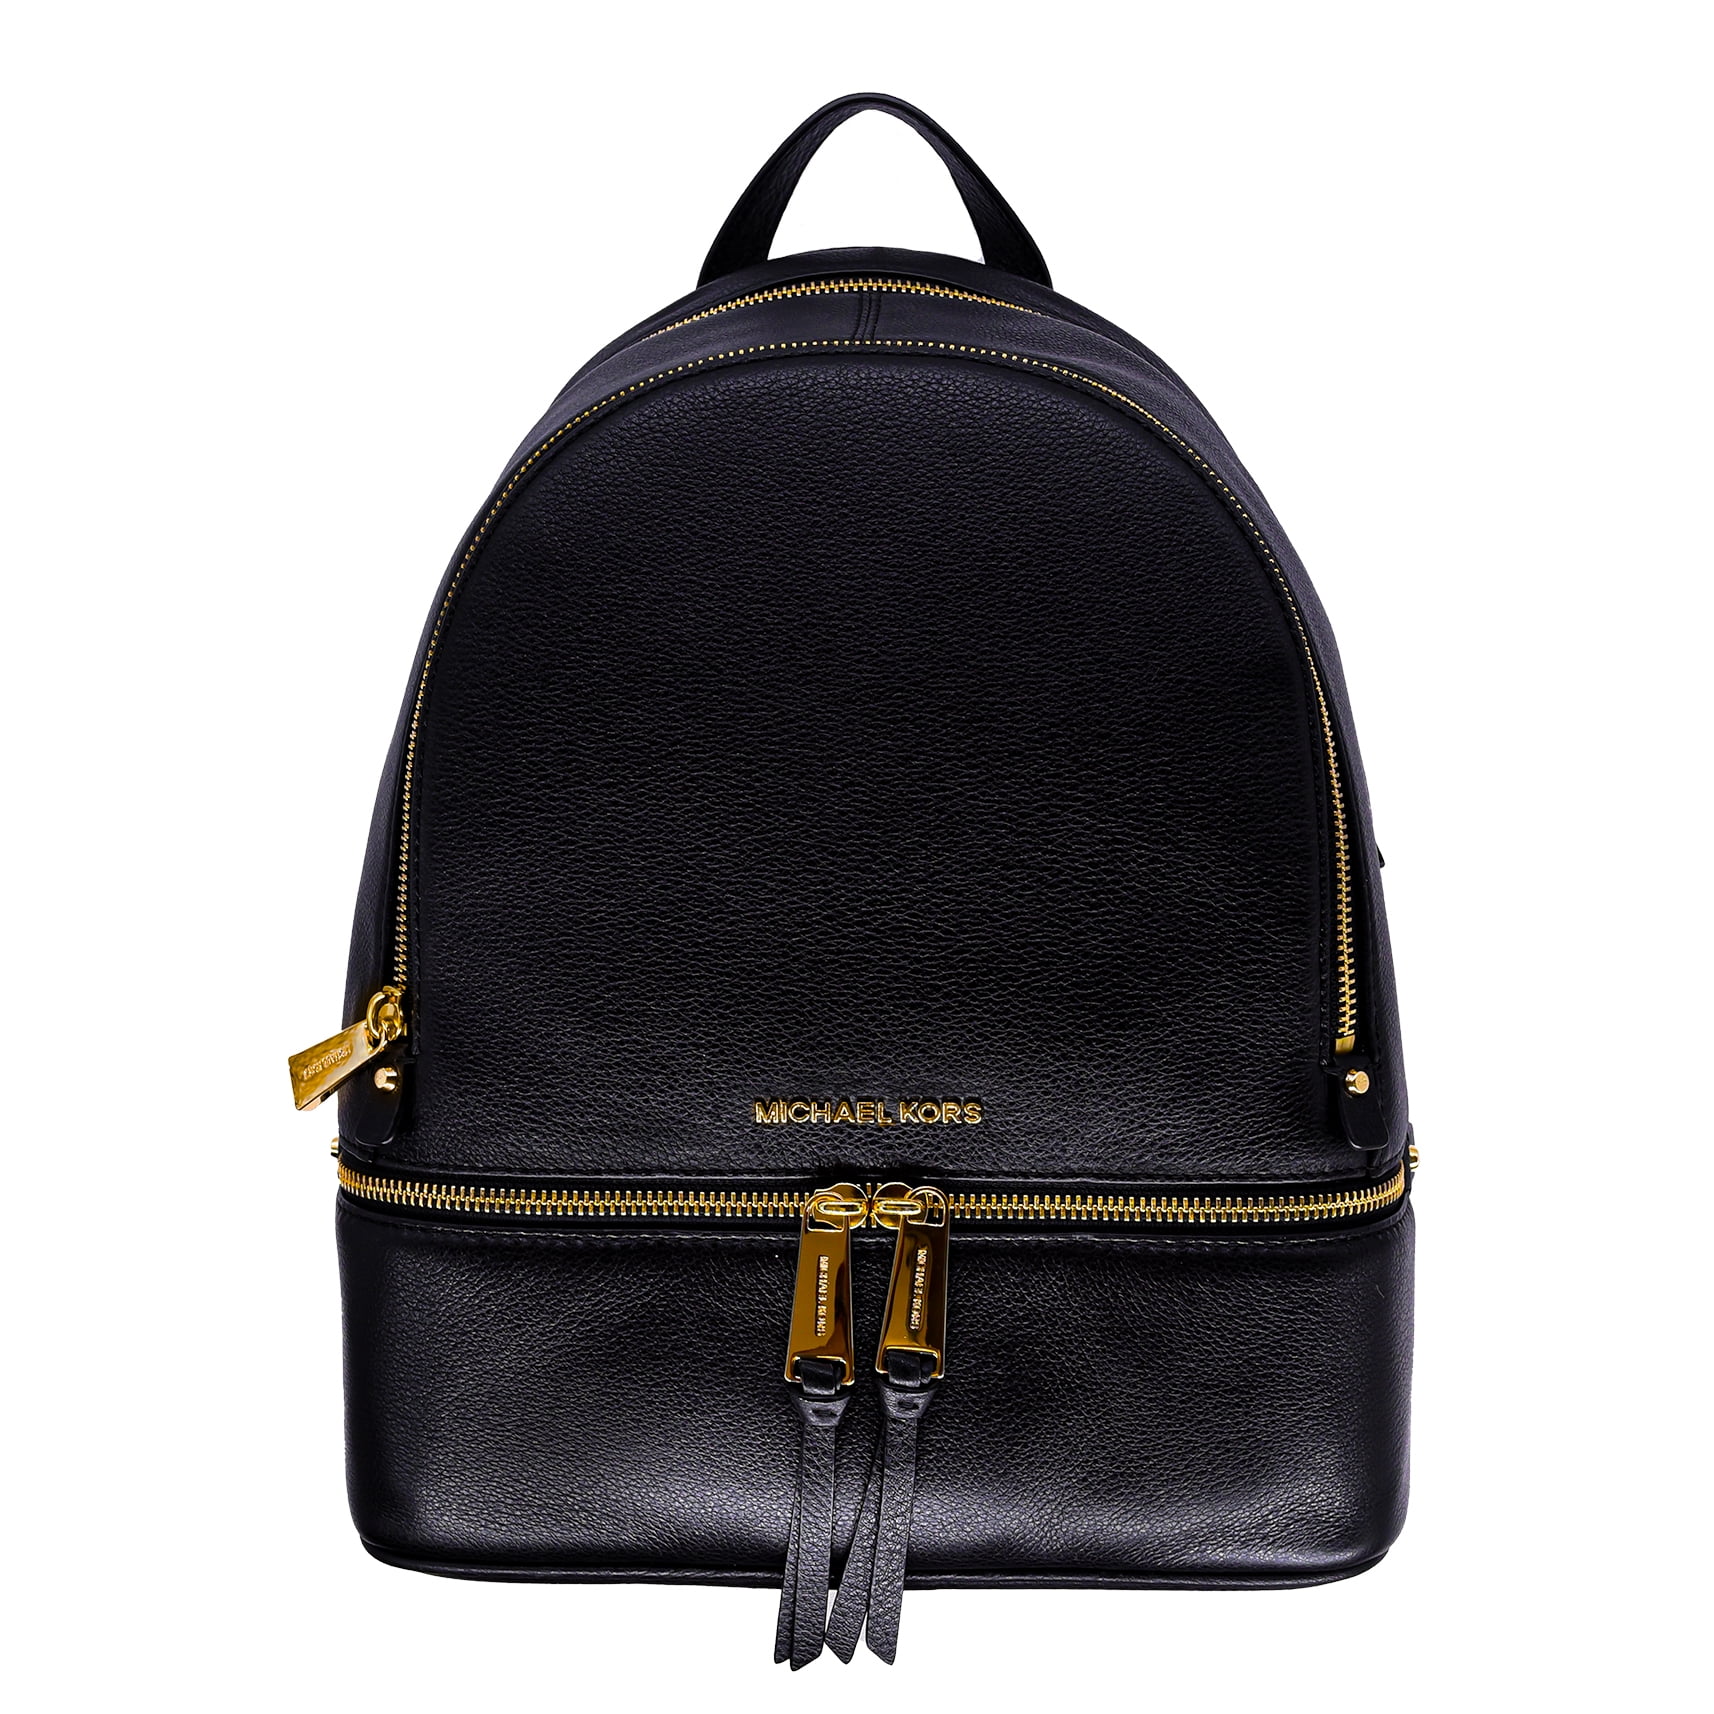 Michael Kors Women's Rhea Zip Medium Leather Backpack Black Walmart.com